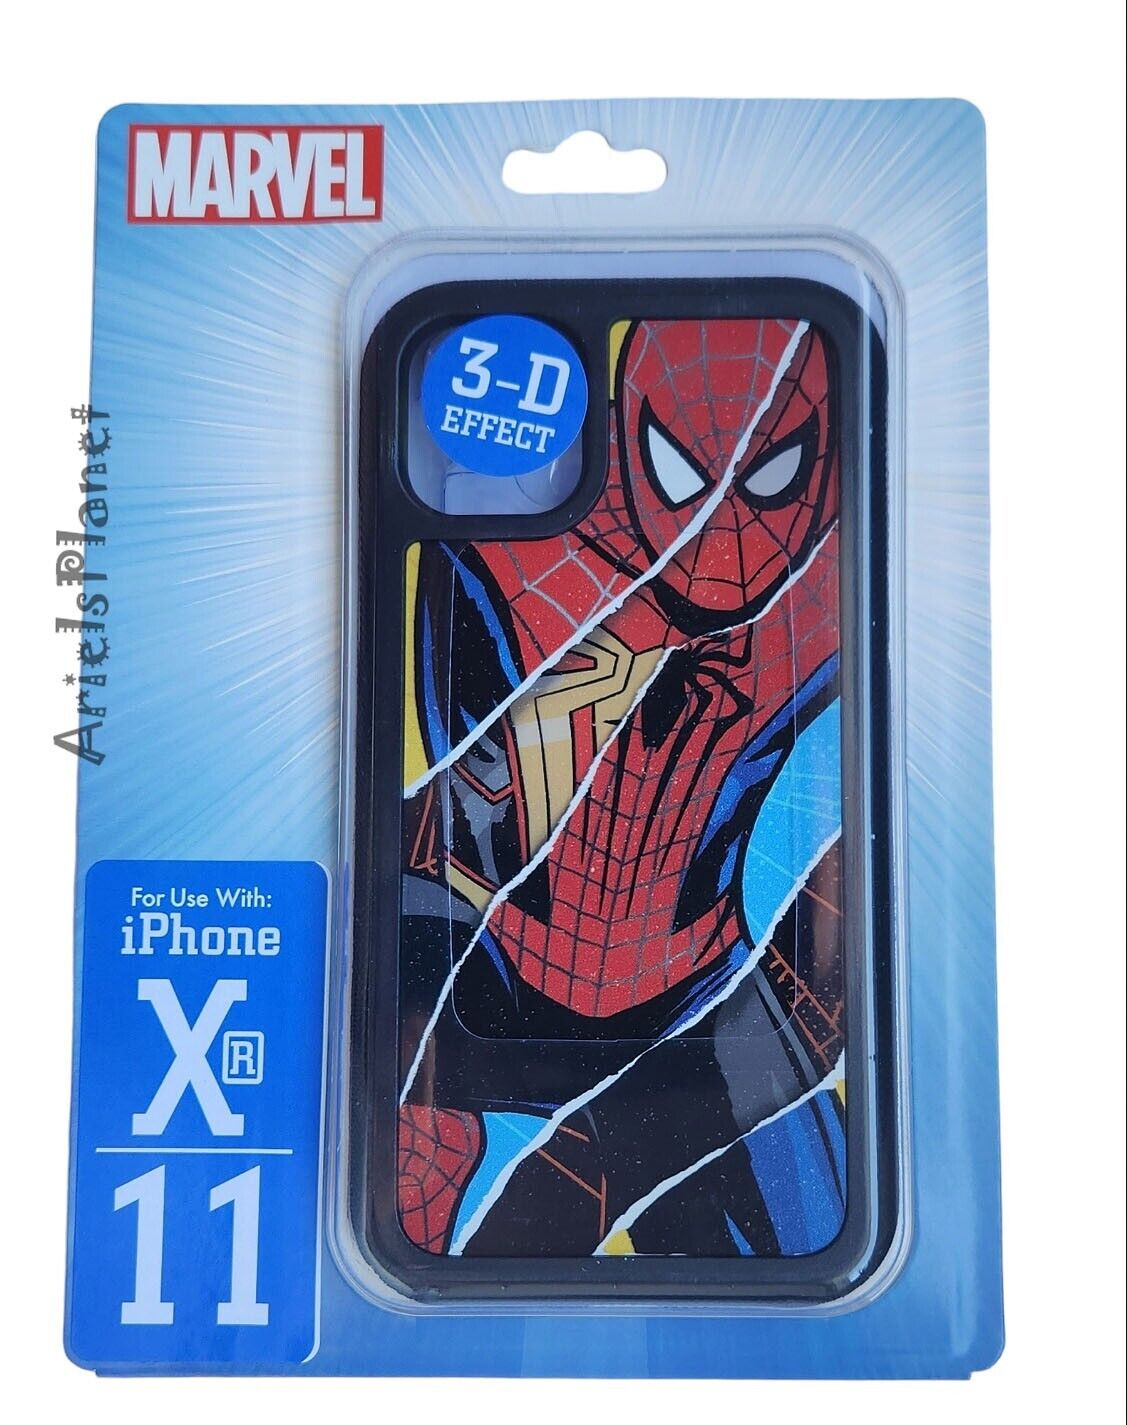 2023 Disney Parks Marvel Avengers Spider-Man 3-D iPhone XR & 11 Cover